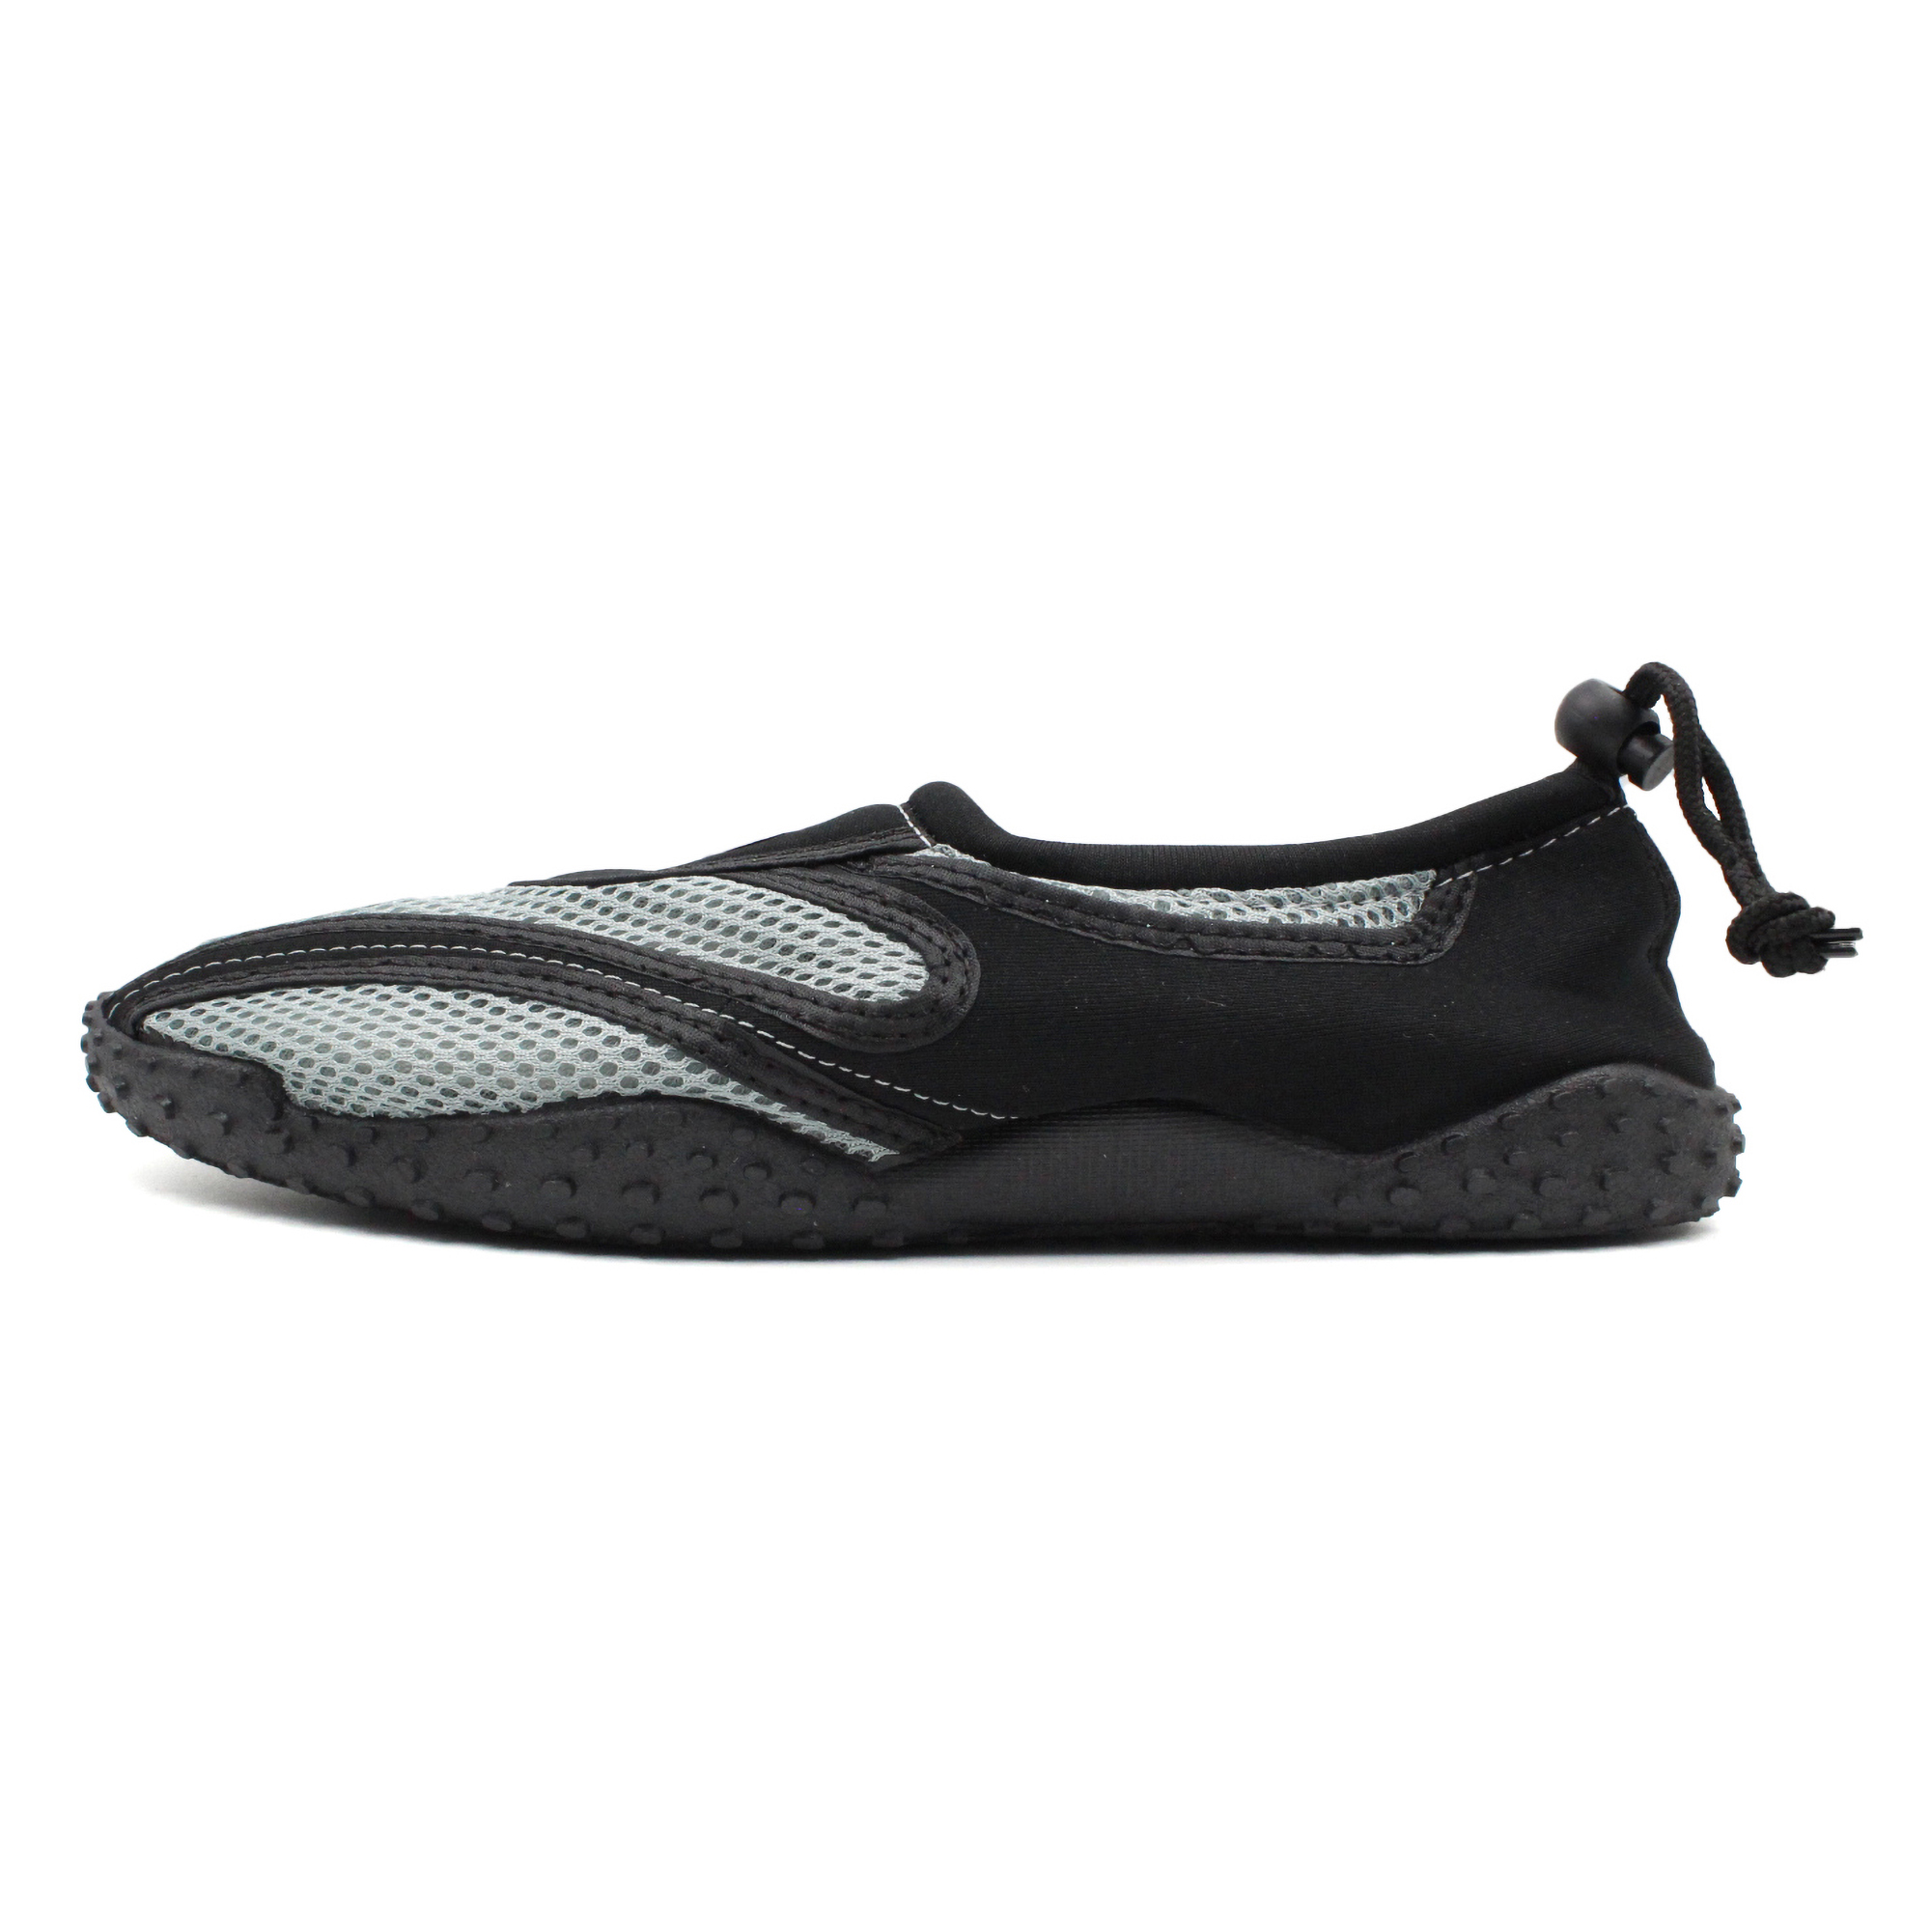 Ventana Men's Water Shoes Beach Aqua Sock Quick Dry Pool Slip On Sandals - image 4 of 5